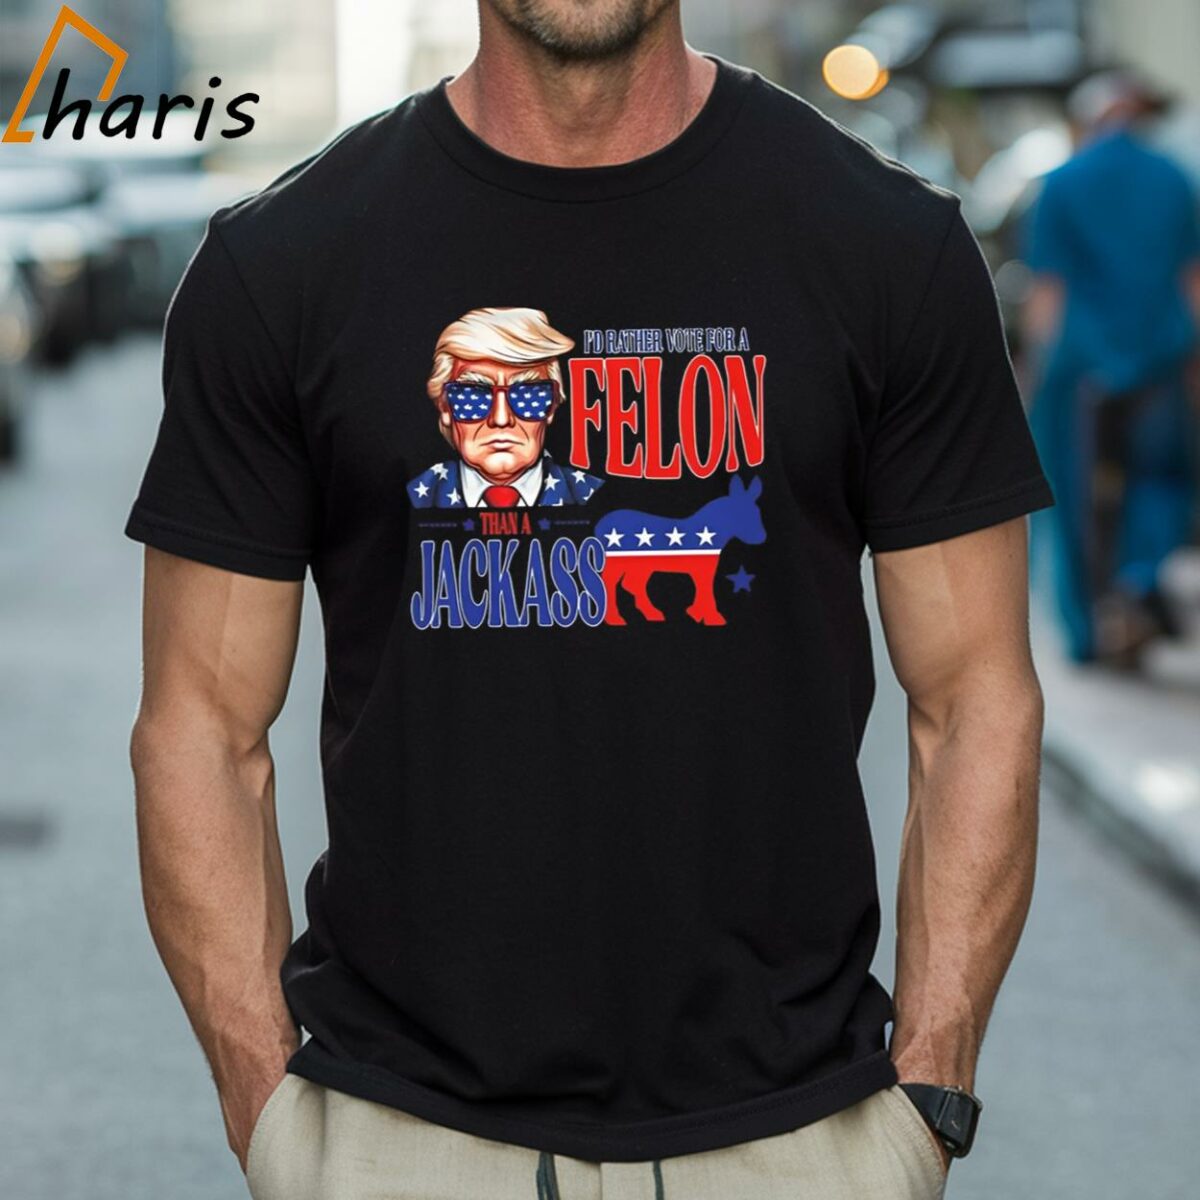 Trump Id Rather Vote For Felon Than A Jackass T shirt 1 Shirt